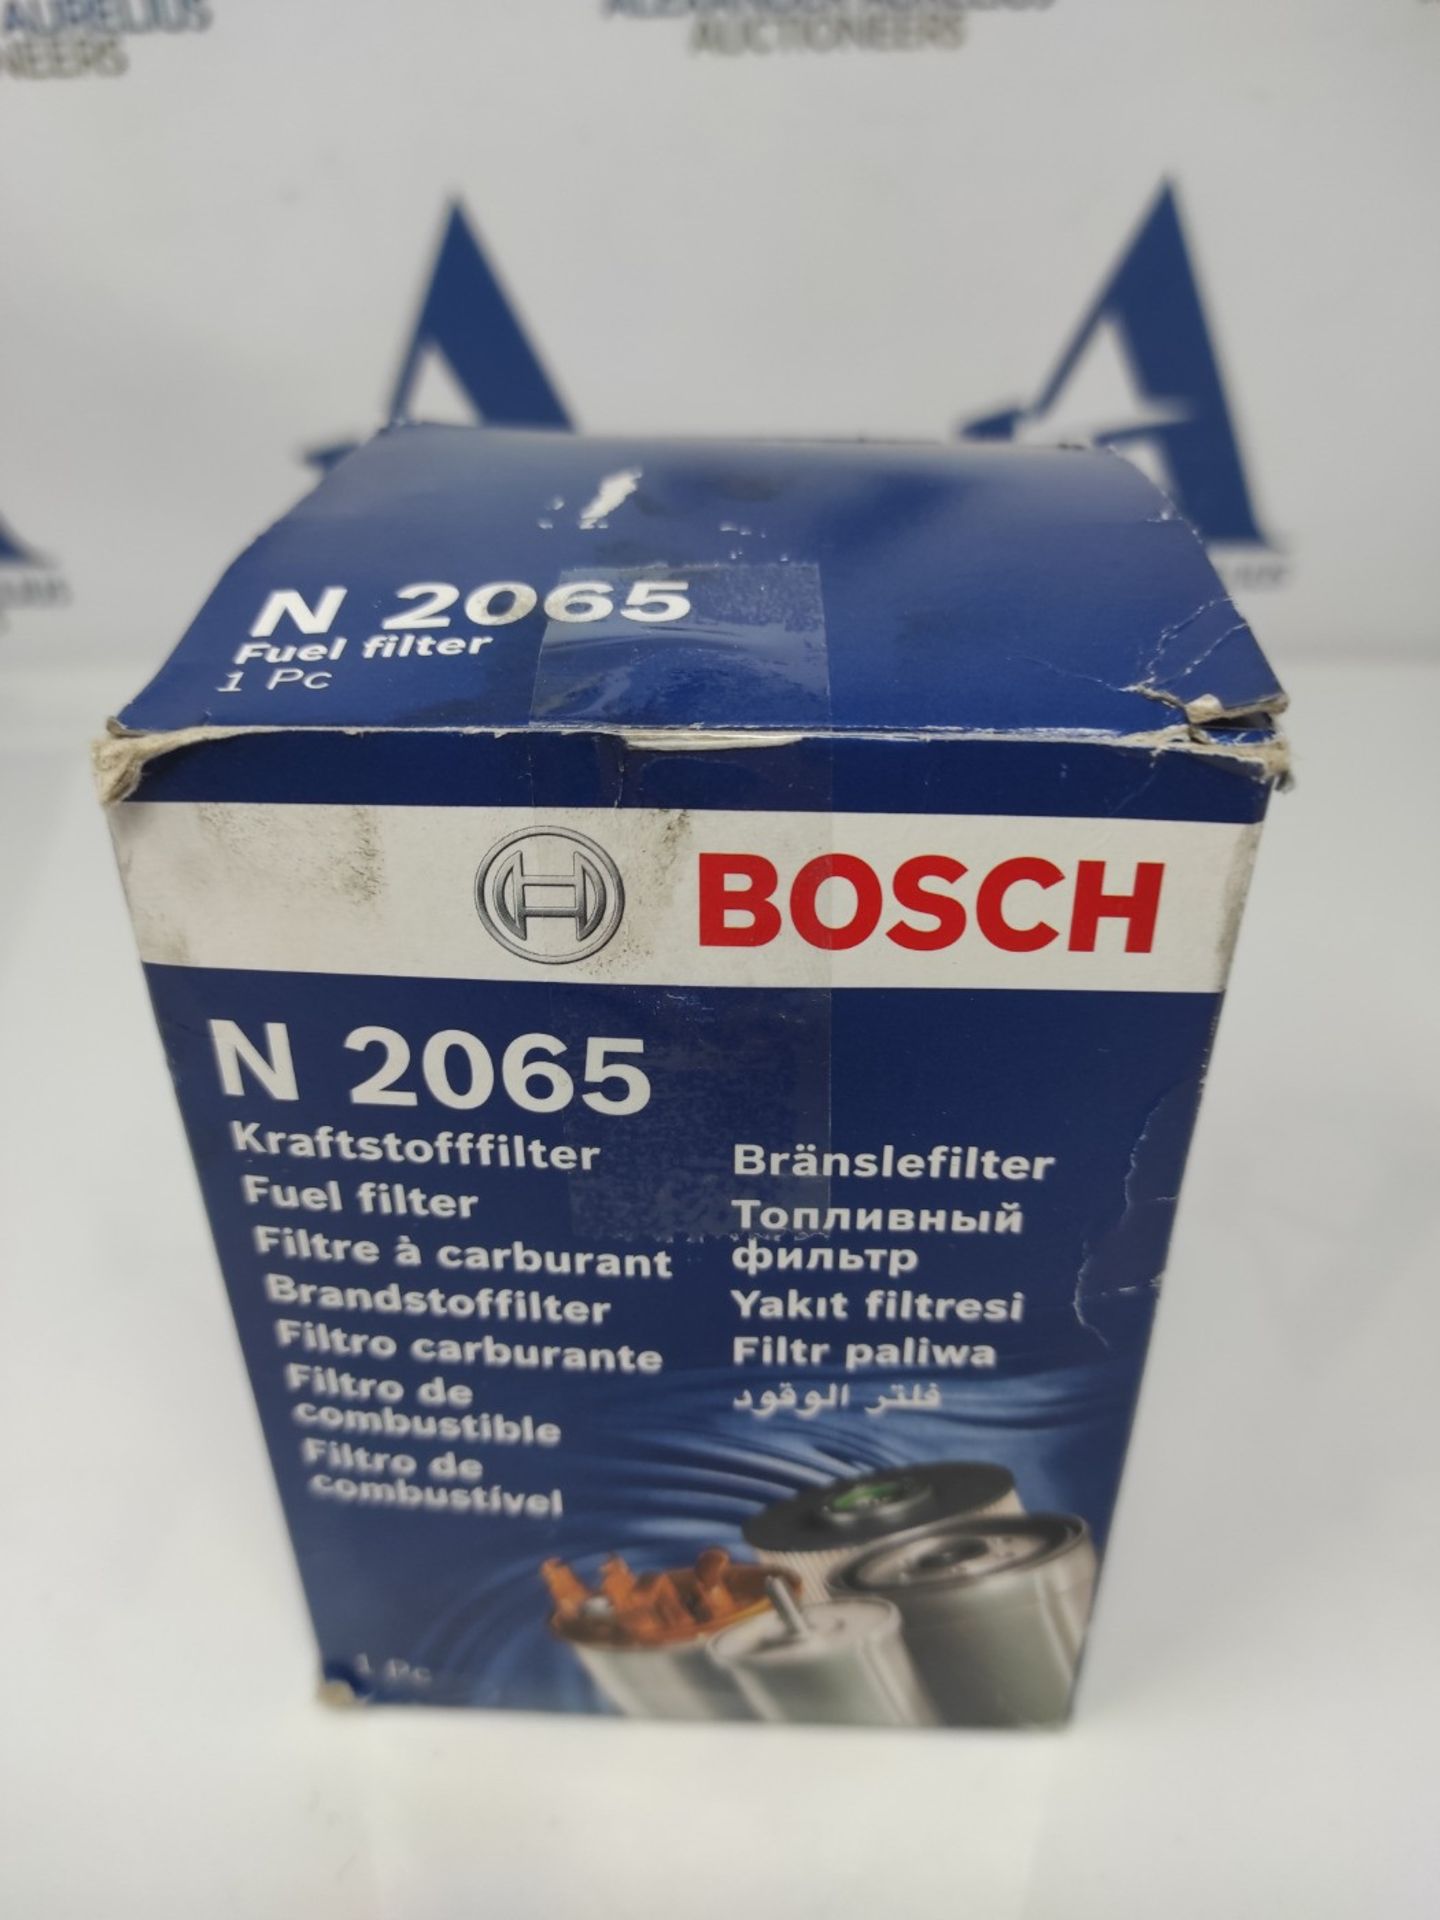 Bosch N2065 - Diesel Filter for Cars - Image 3 of 3